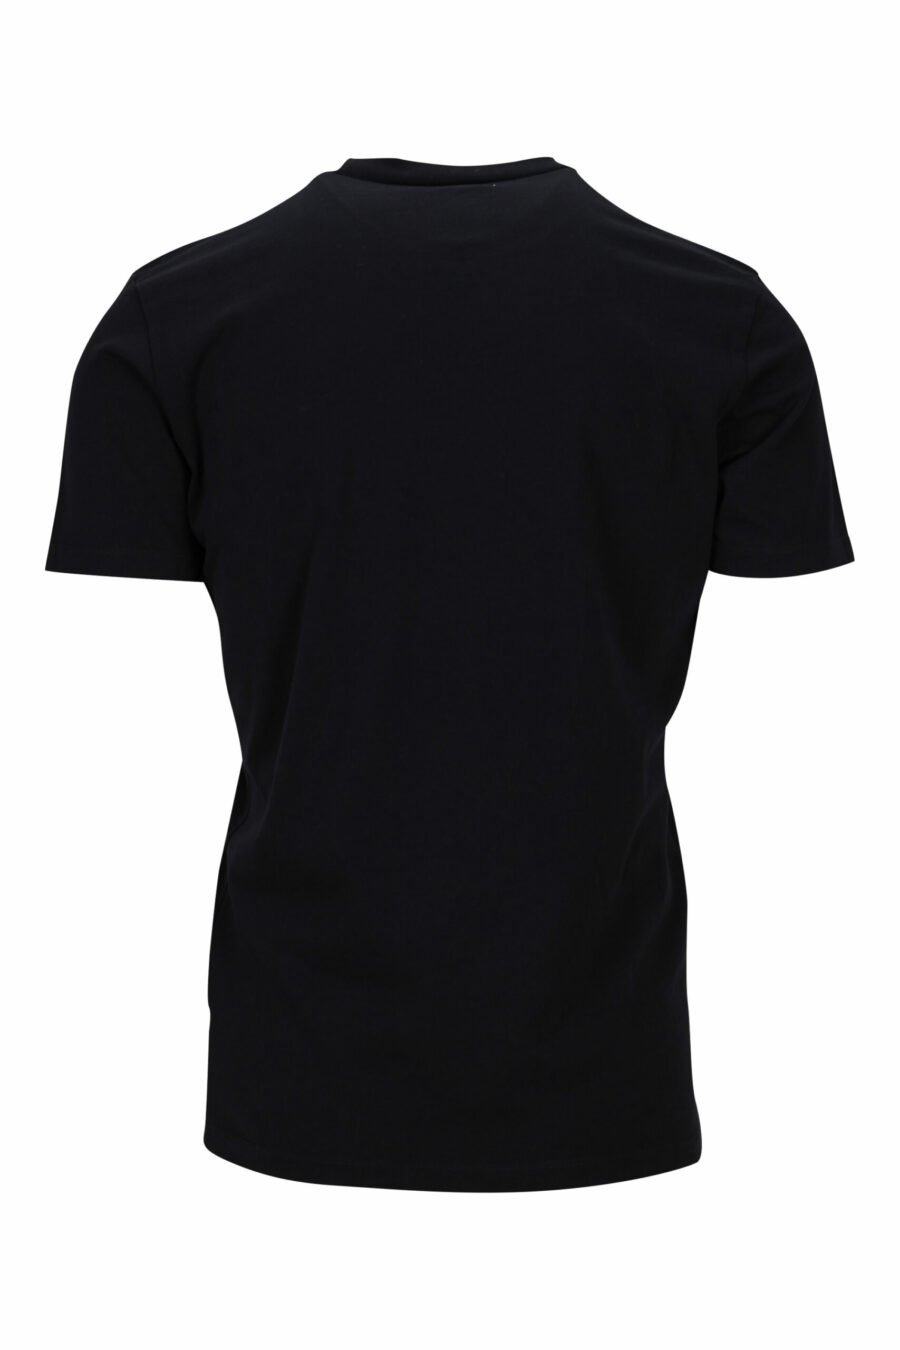 T-shirt noir avec maxilogo "collegue league" - 8054148504700 1 scaled